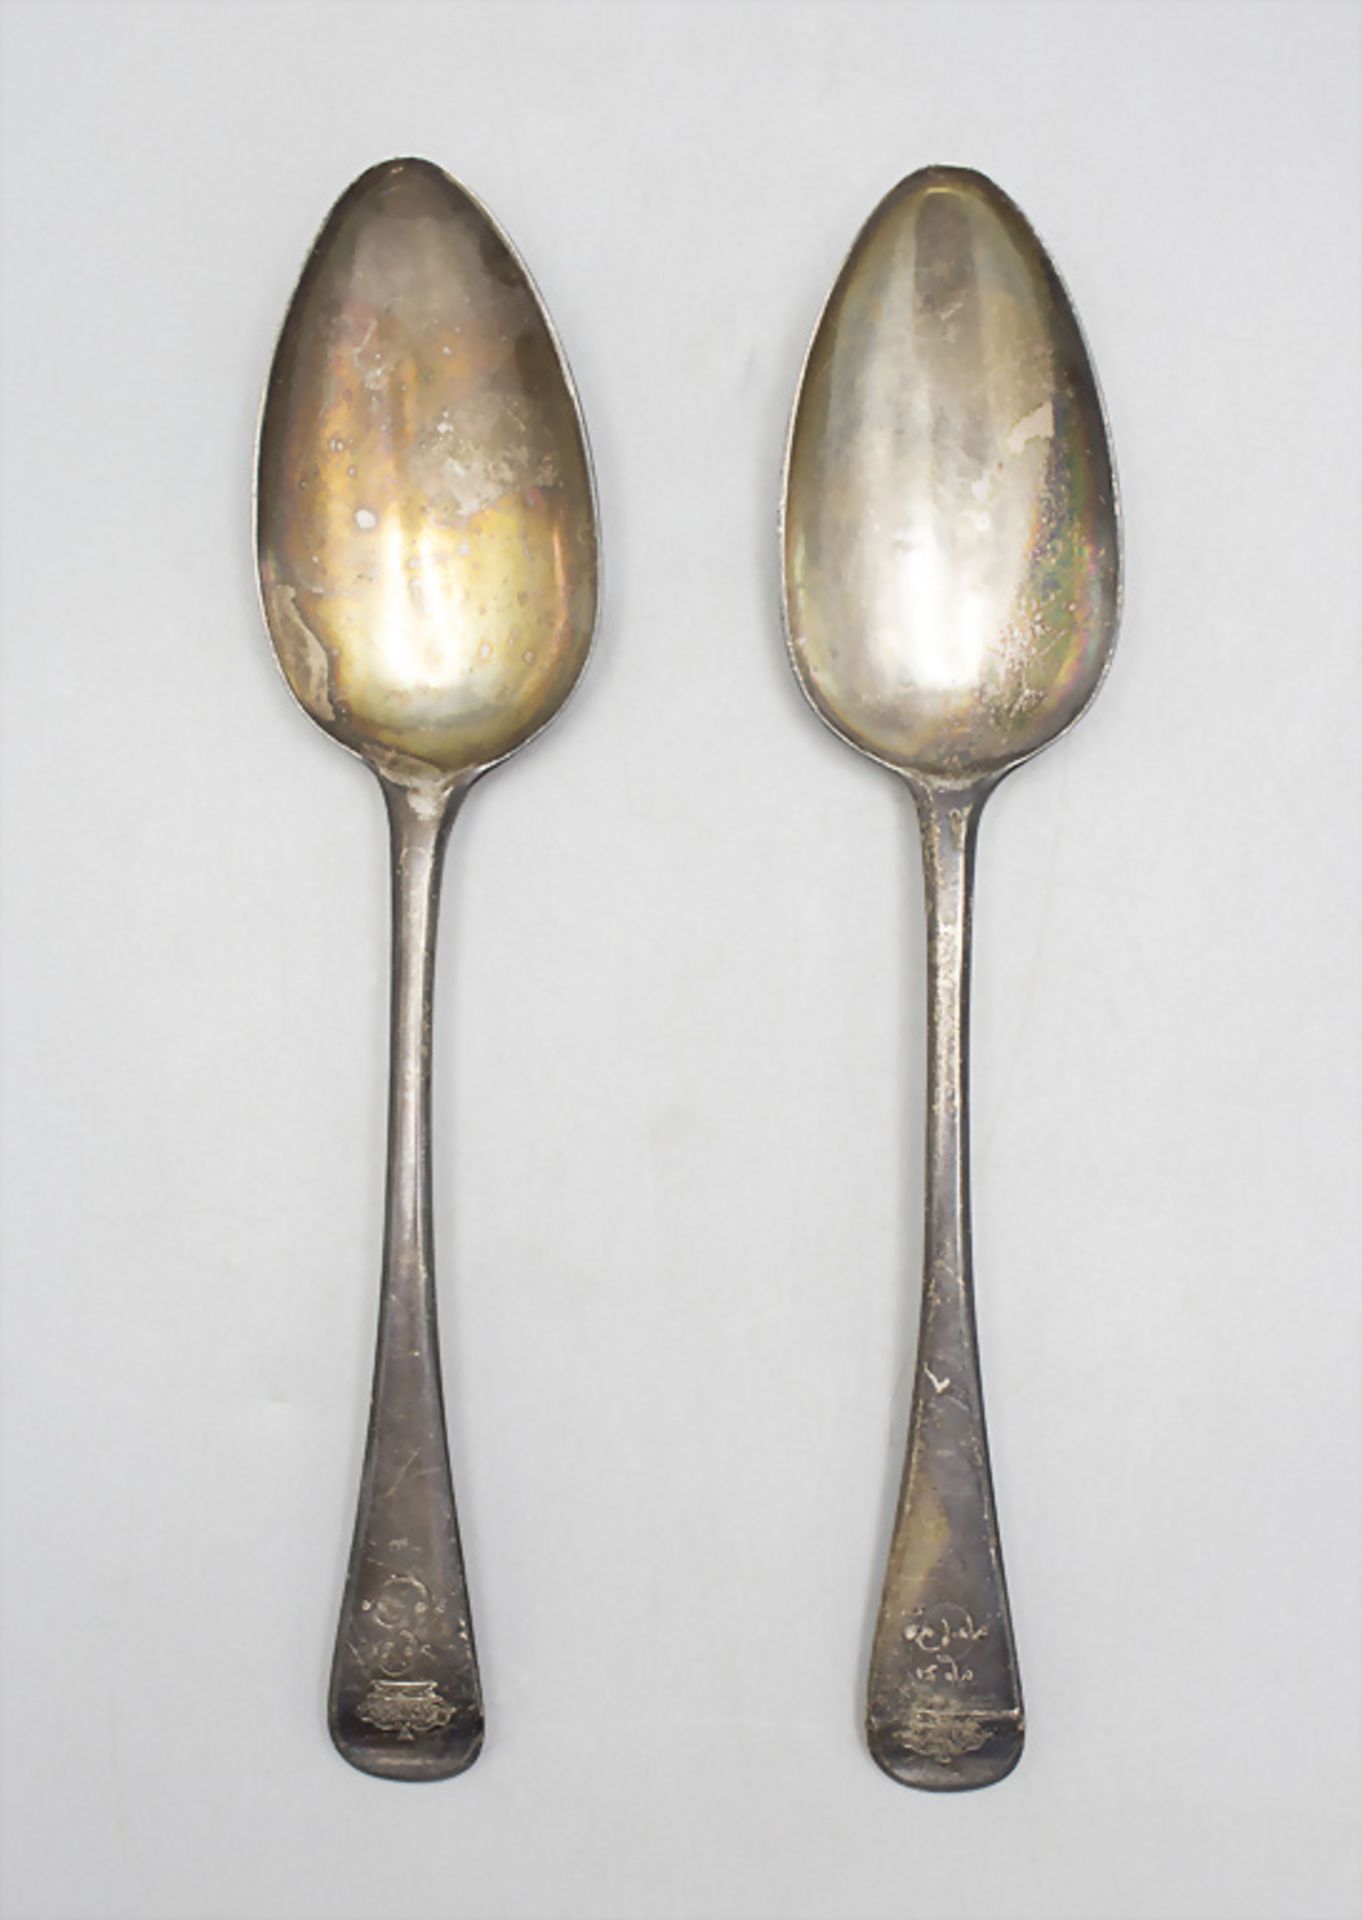 2 Löffel / 2 silver spoons, Solomon Hougham, London, 1806